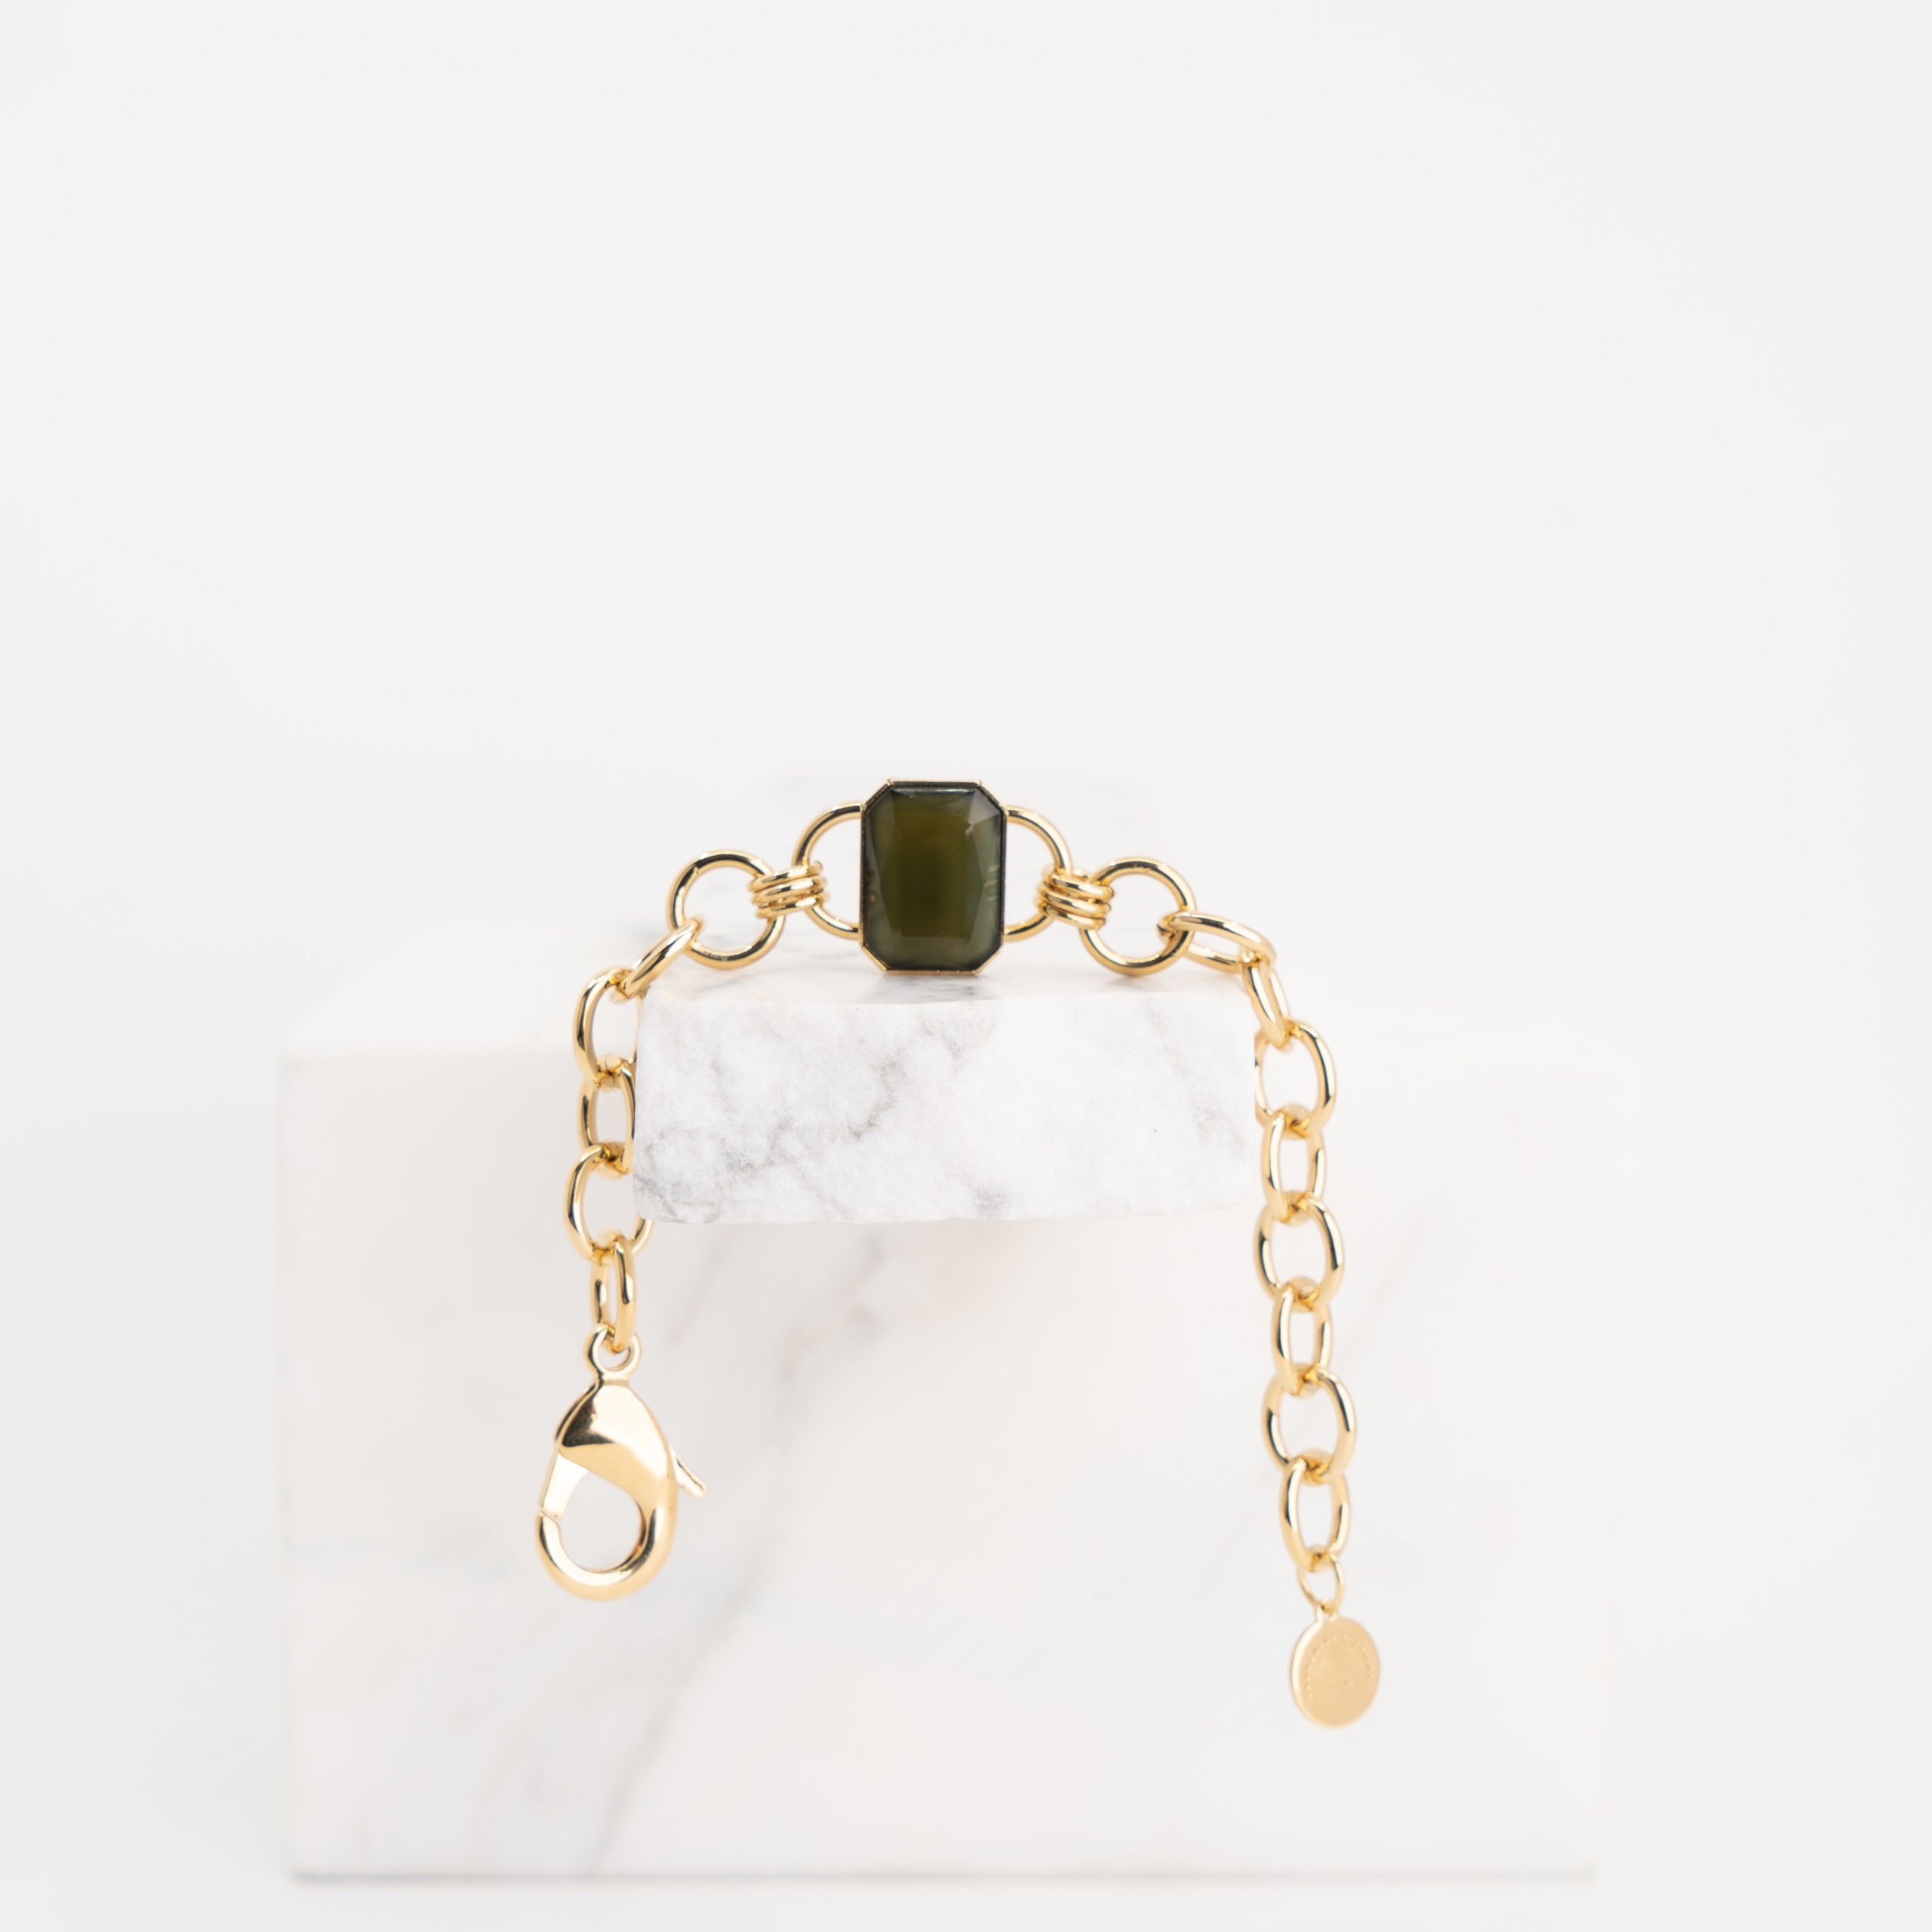 Tiffany green stones necklace